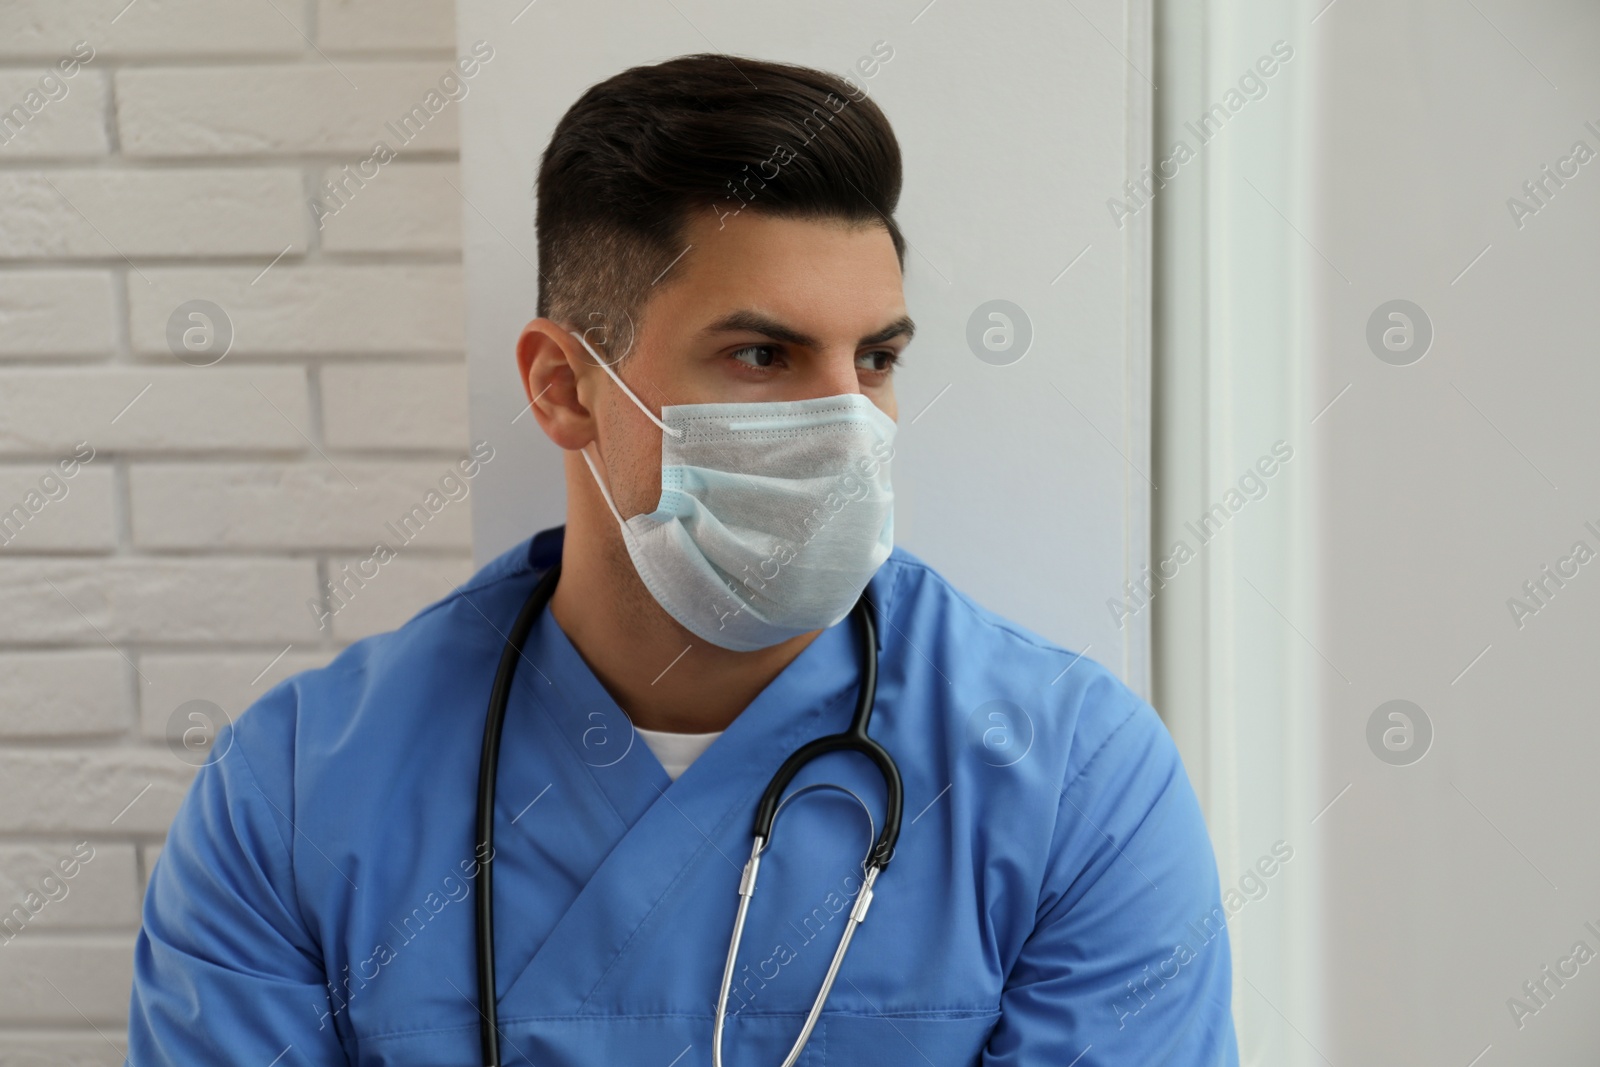 Photo of Sad doctor near window indoors. Stress of health care workers during coronavirus pandemic